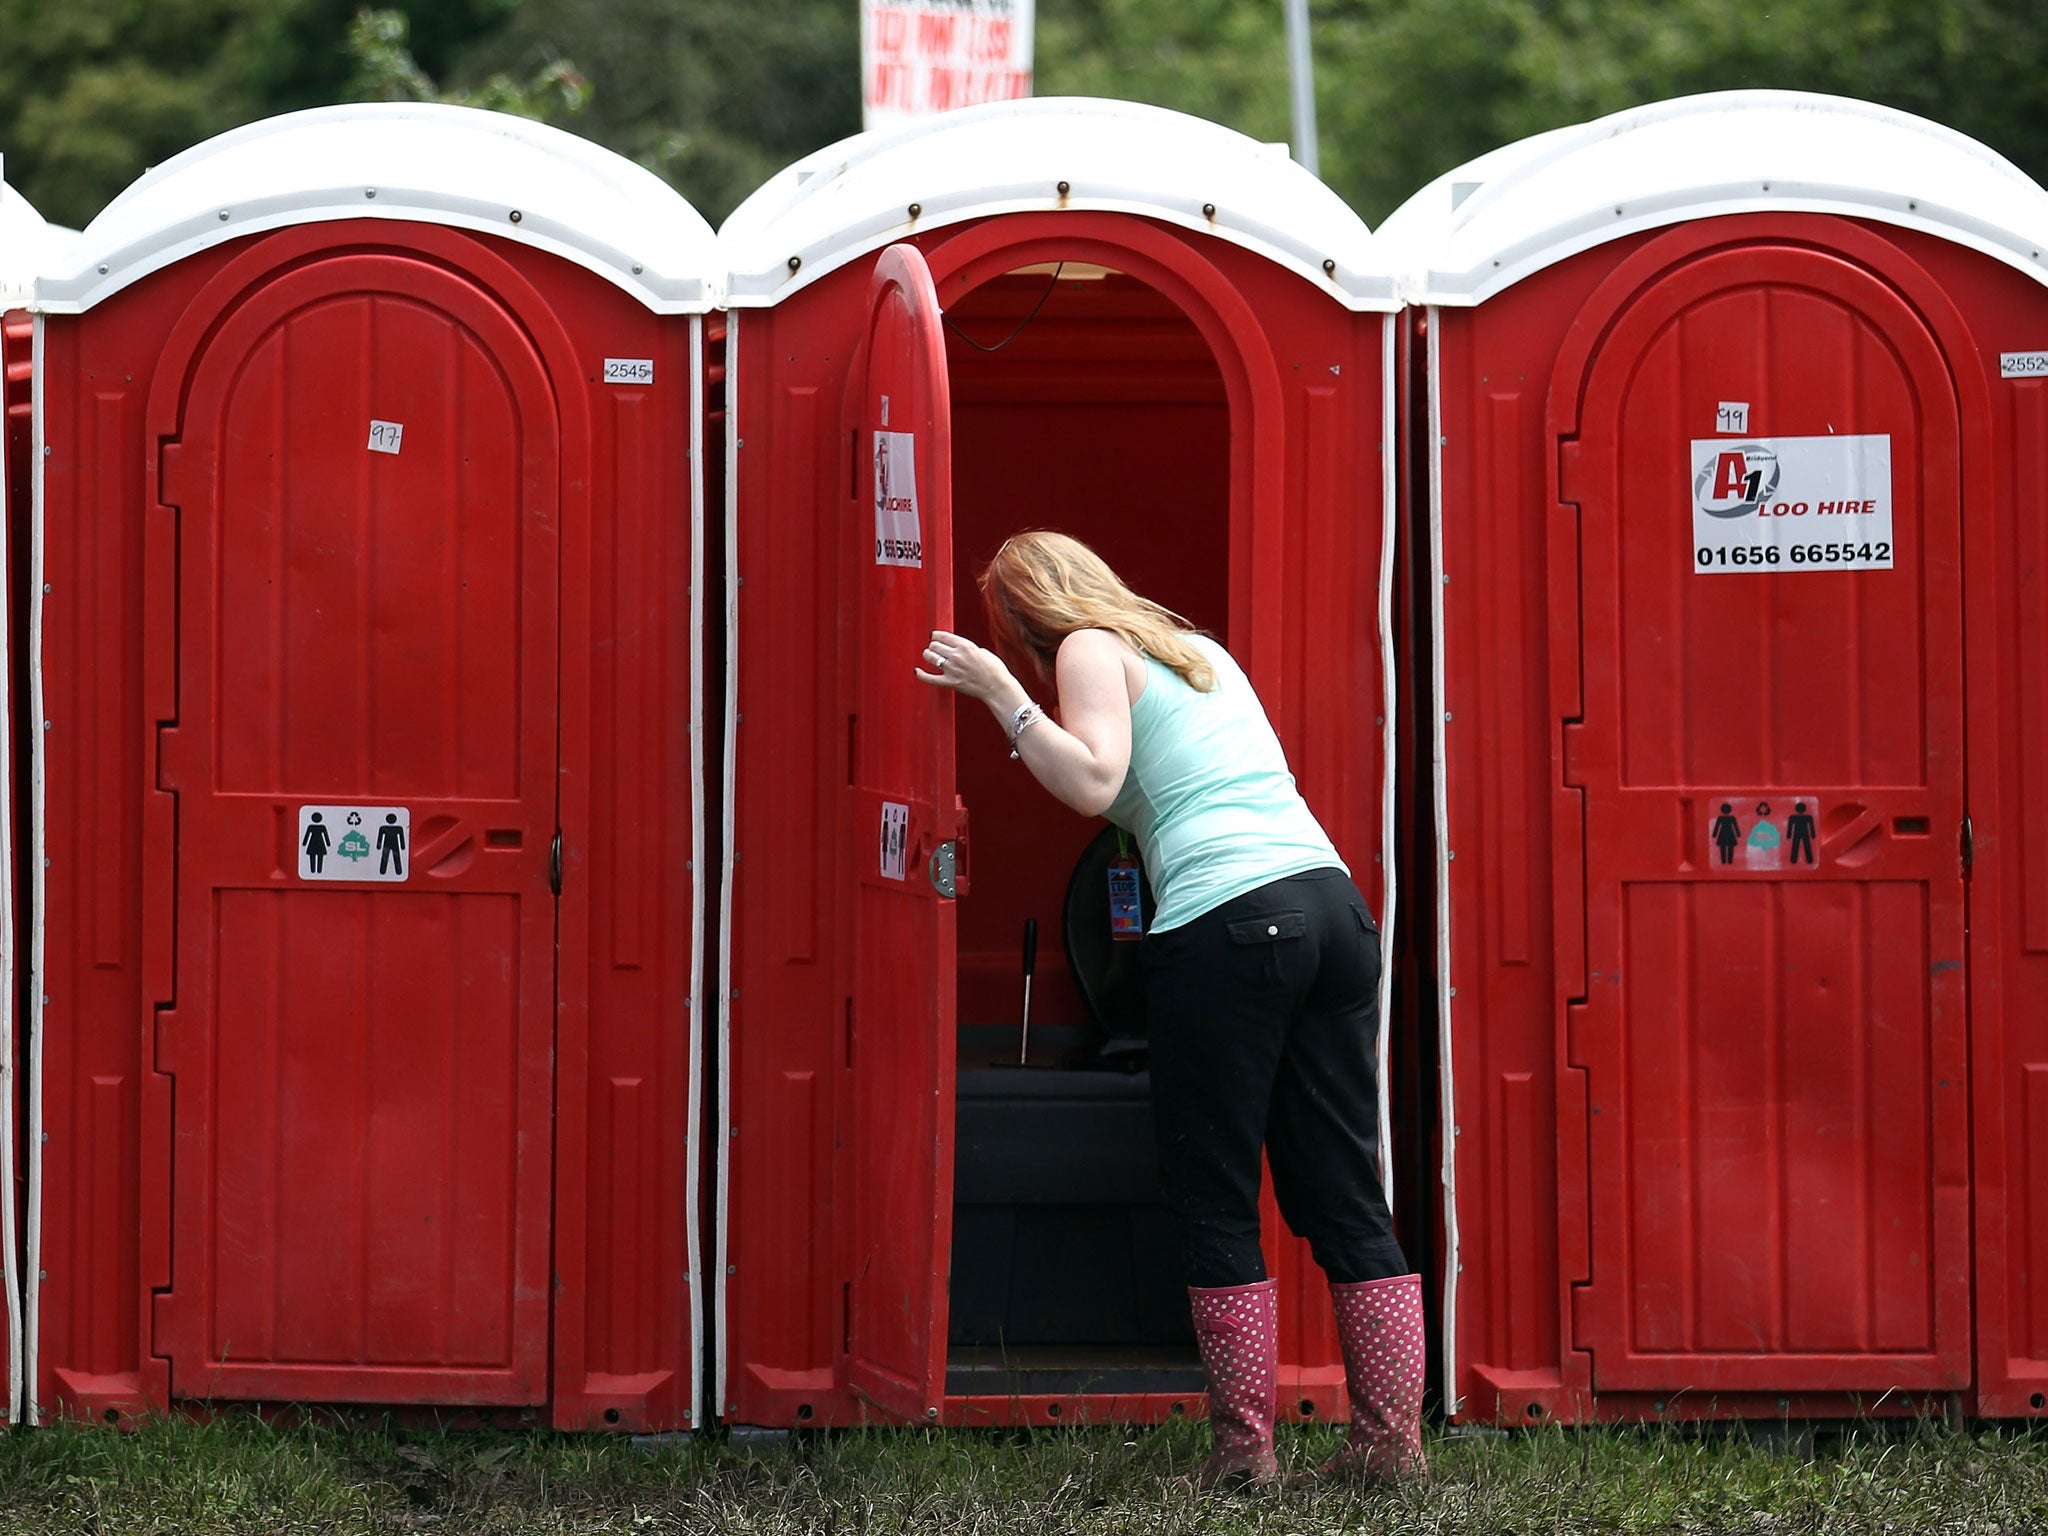 A woman checks the condition of a portable toilet at the Glastonbury Festival site at Worthy Farm, Pilton on June 22, 2011 in Glastonbury, England.